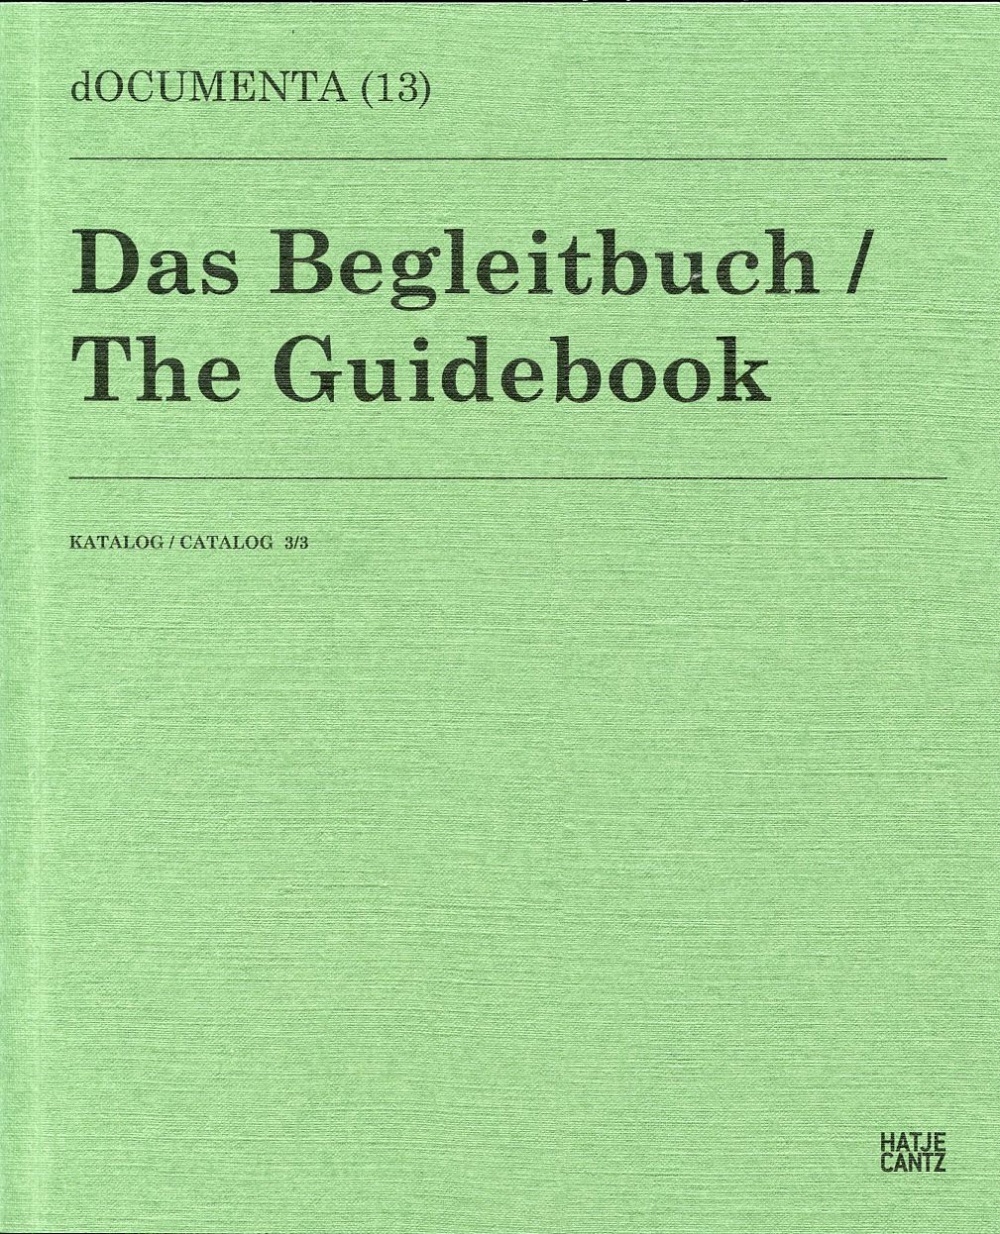 dOCUMENTA (13) The Guidebook